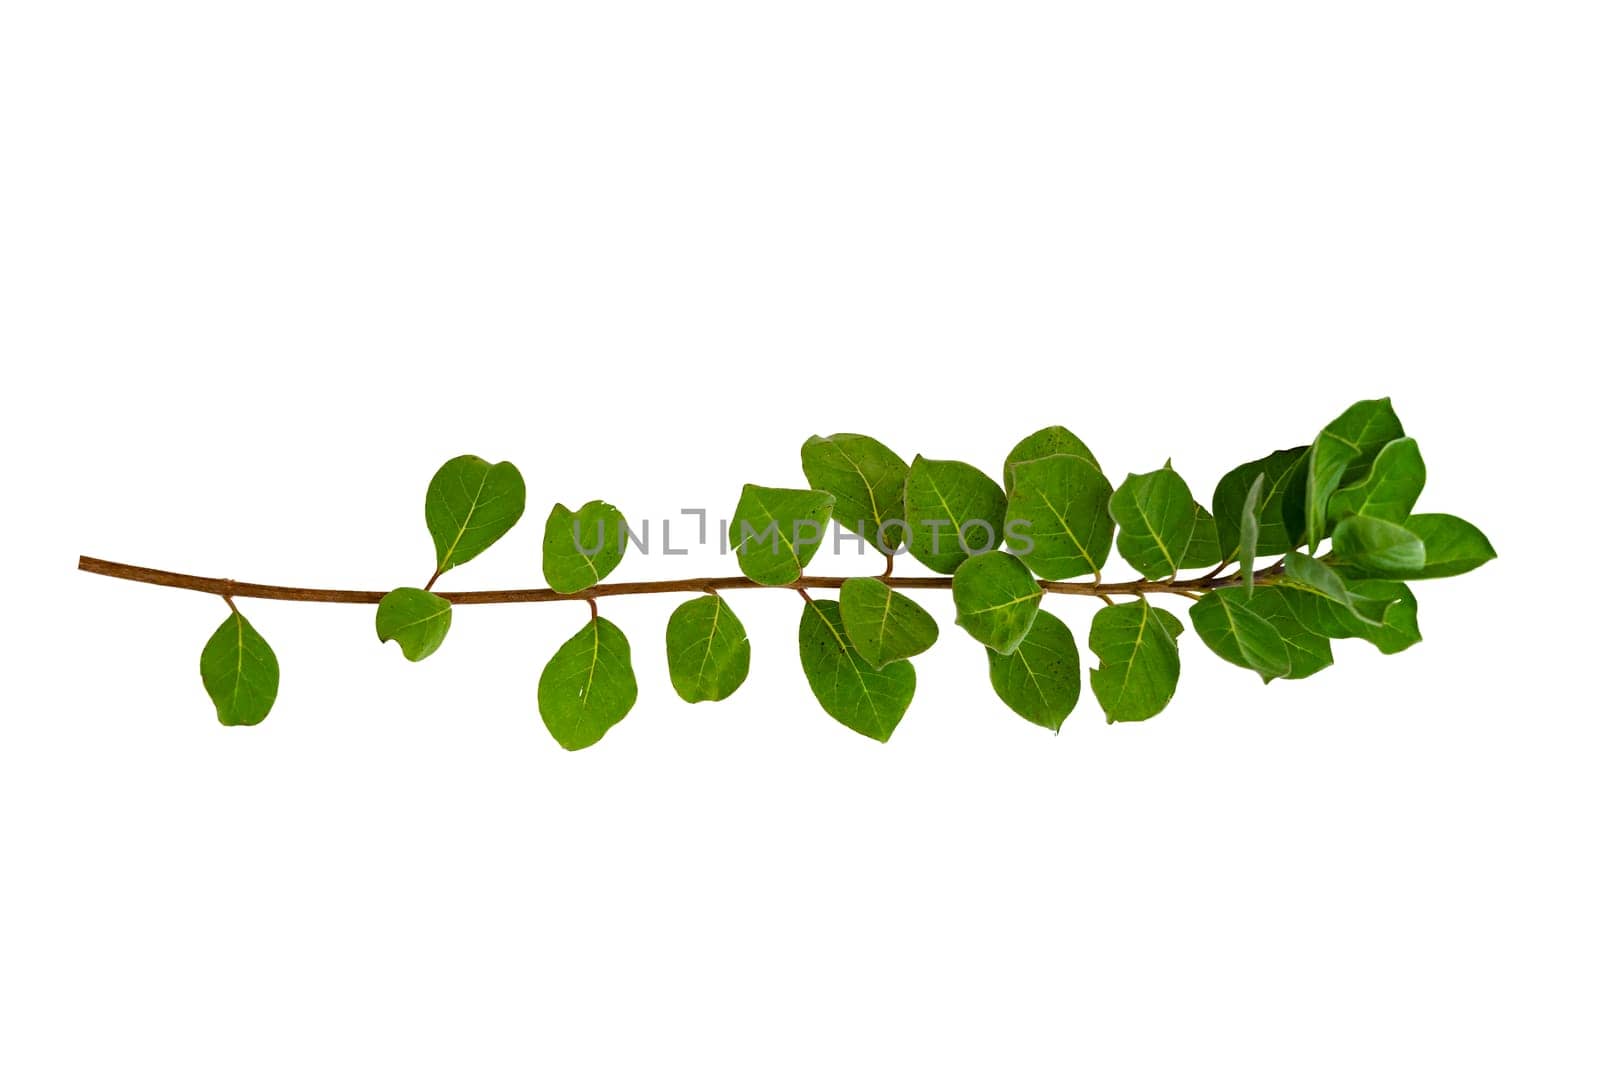 leaf vine isolates on a white background by sarayut_thaneerat